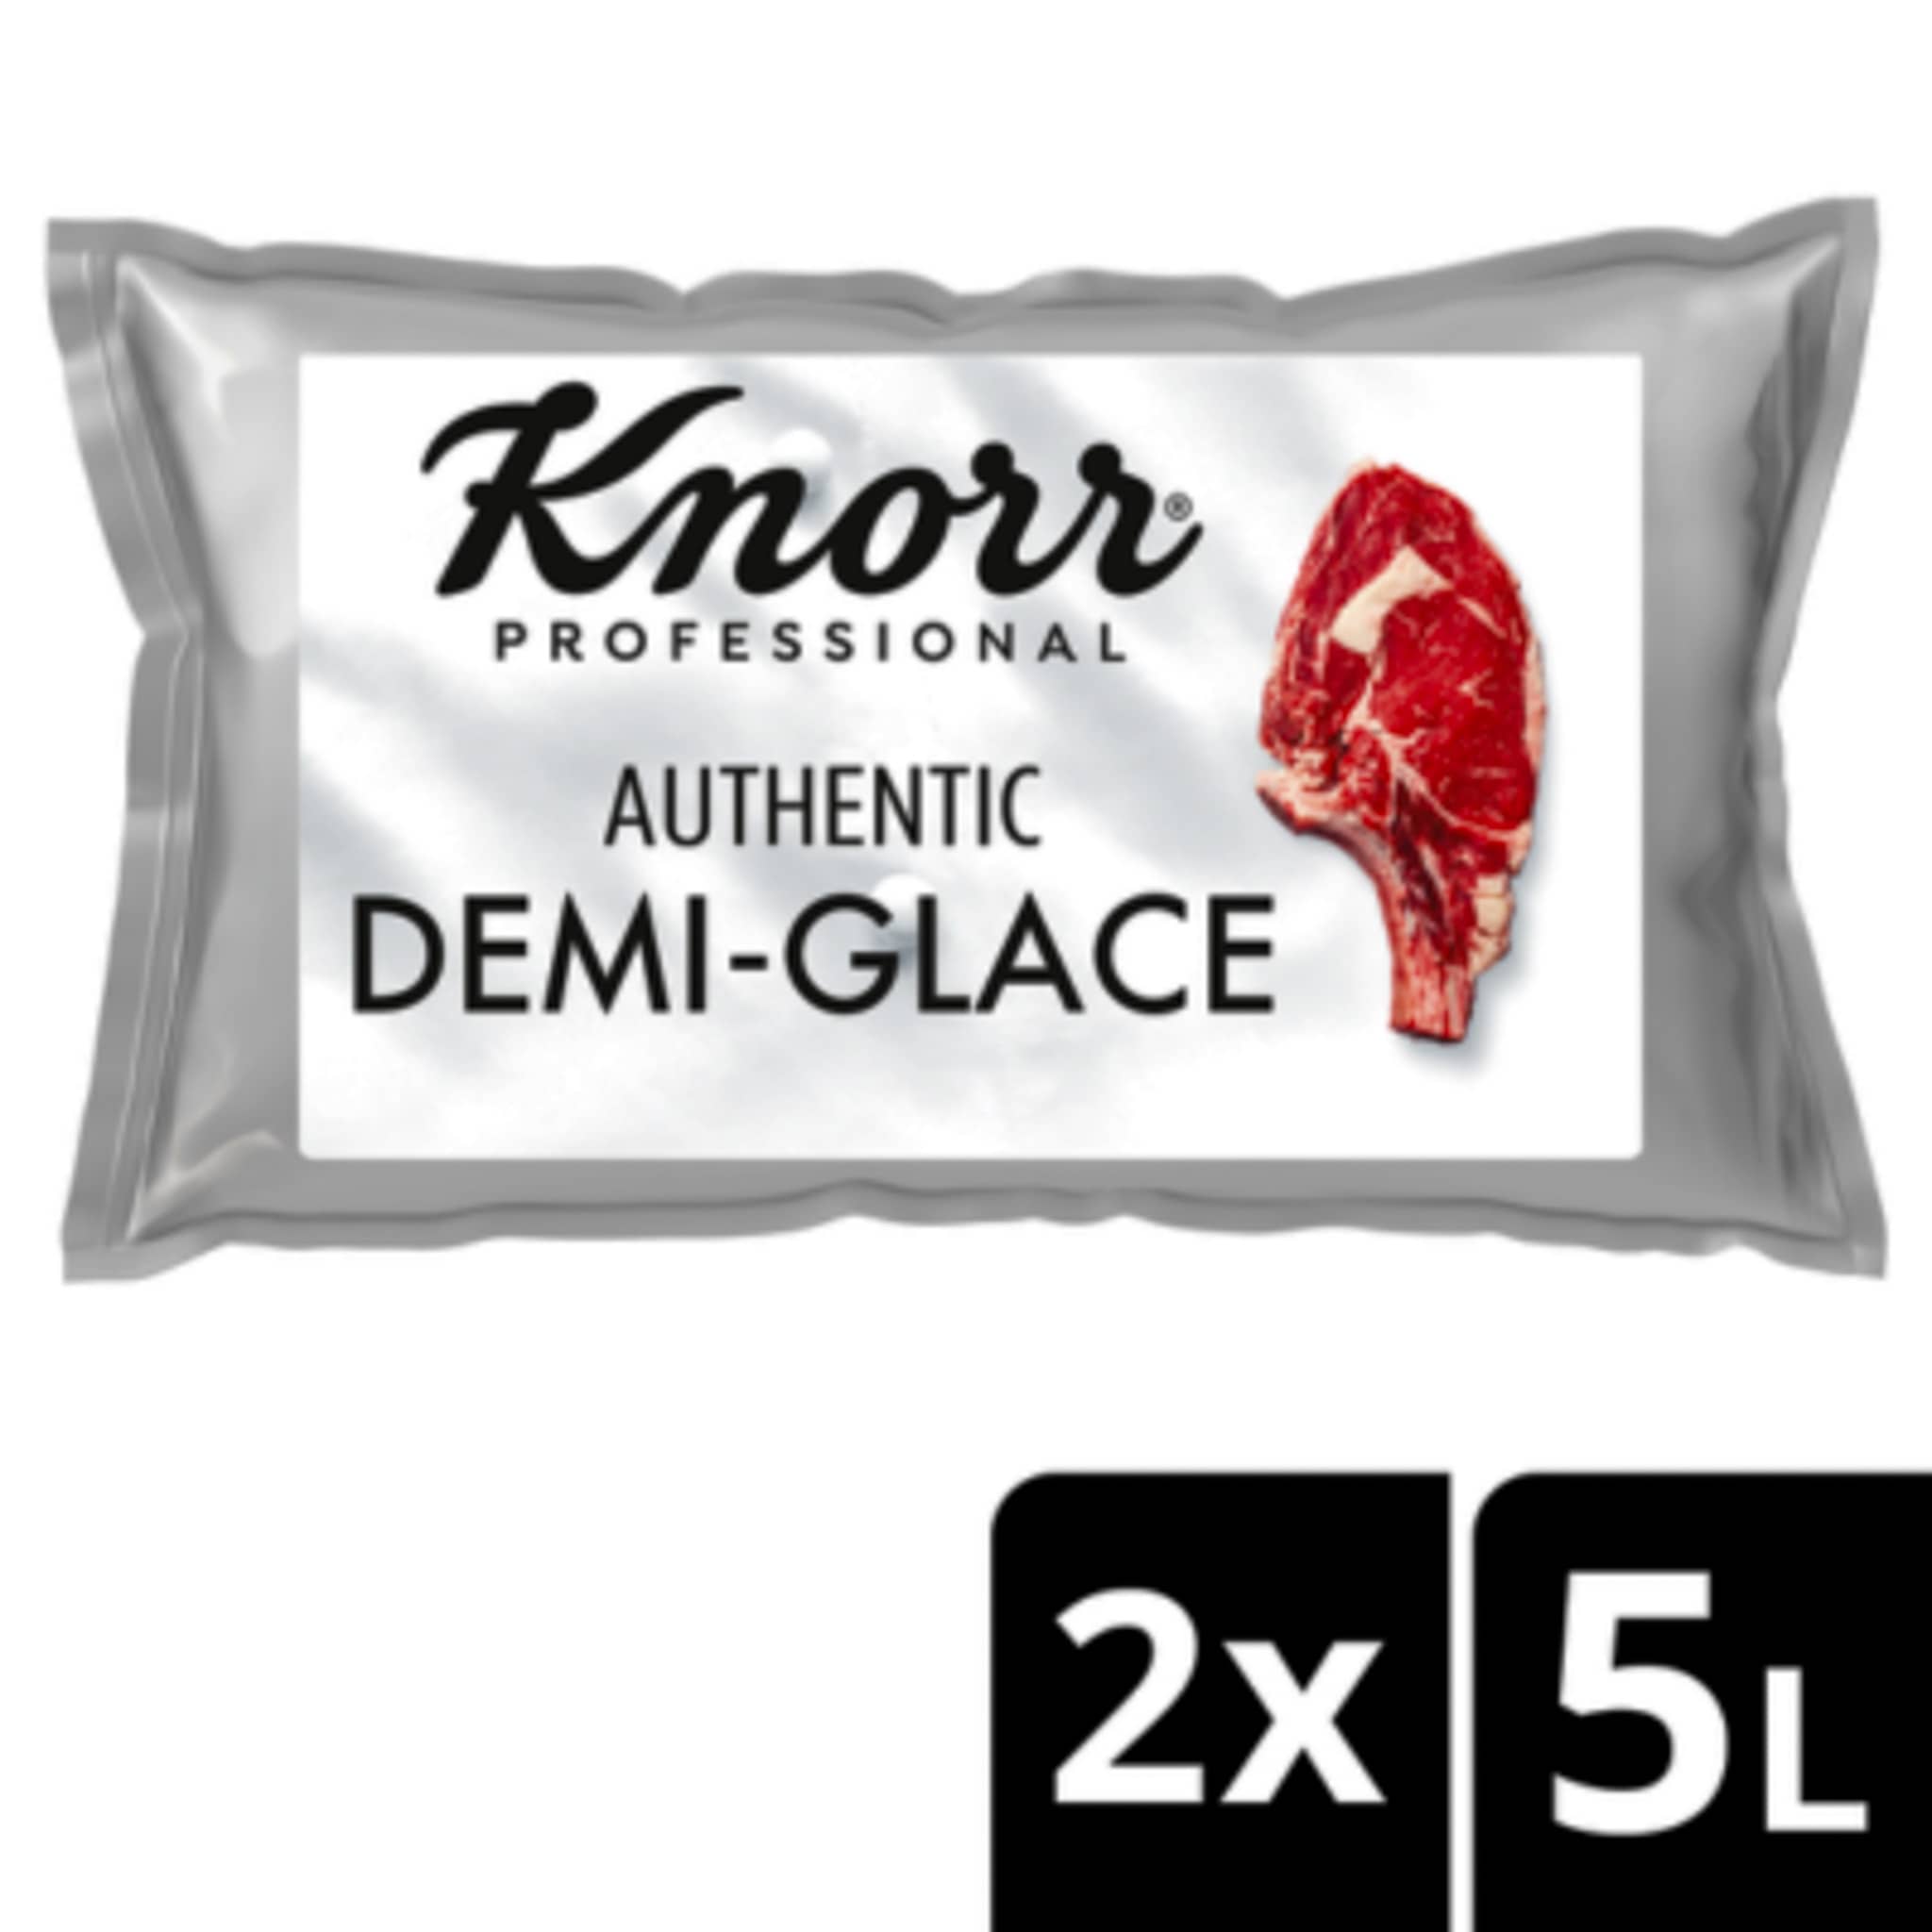 Knorr Professional Demi-Glace 2 x 5 L